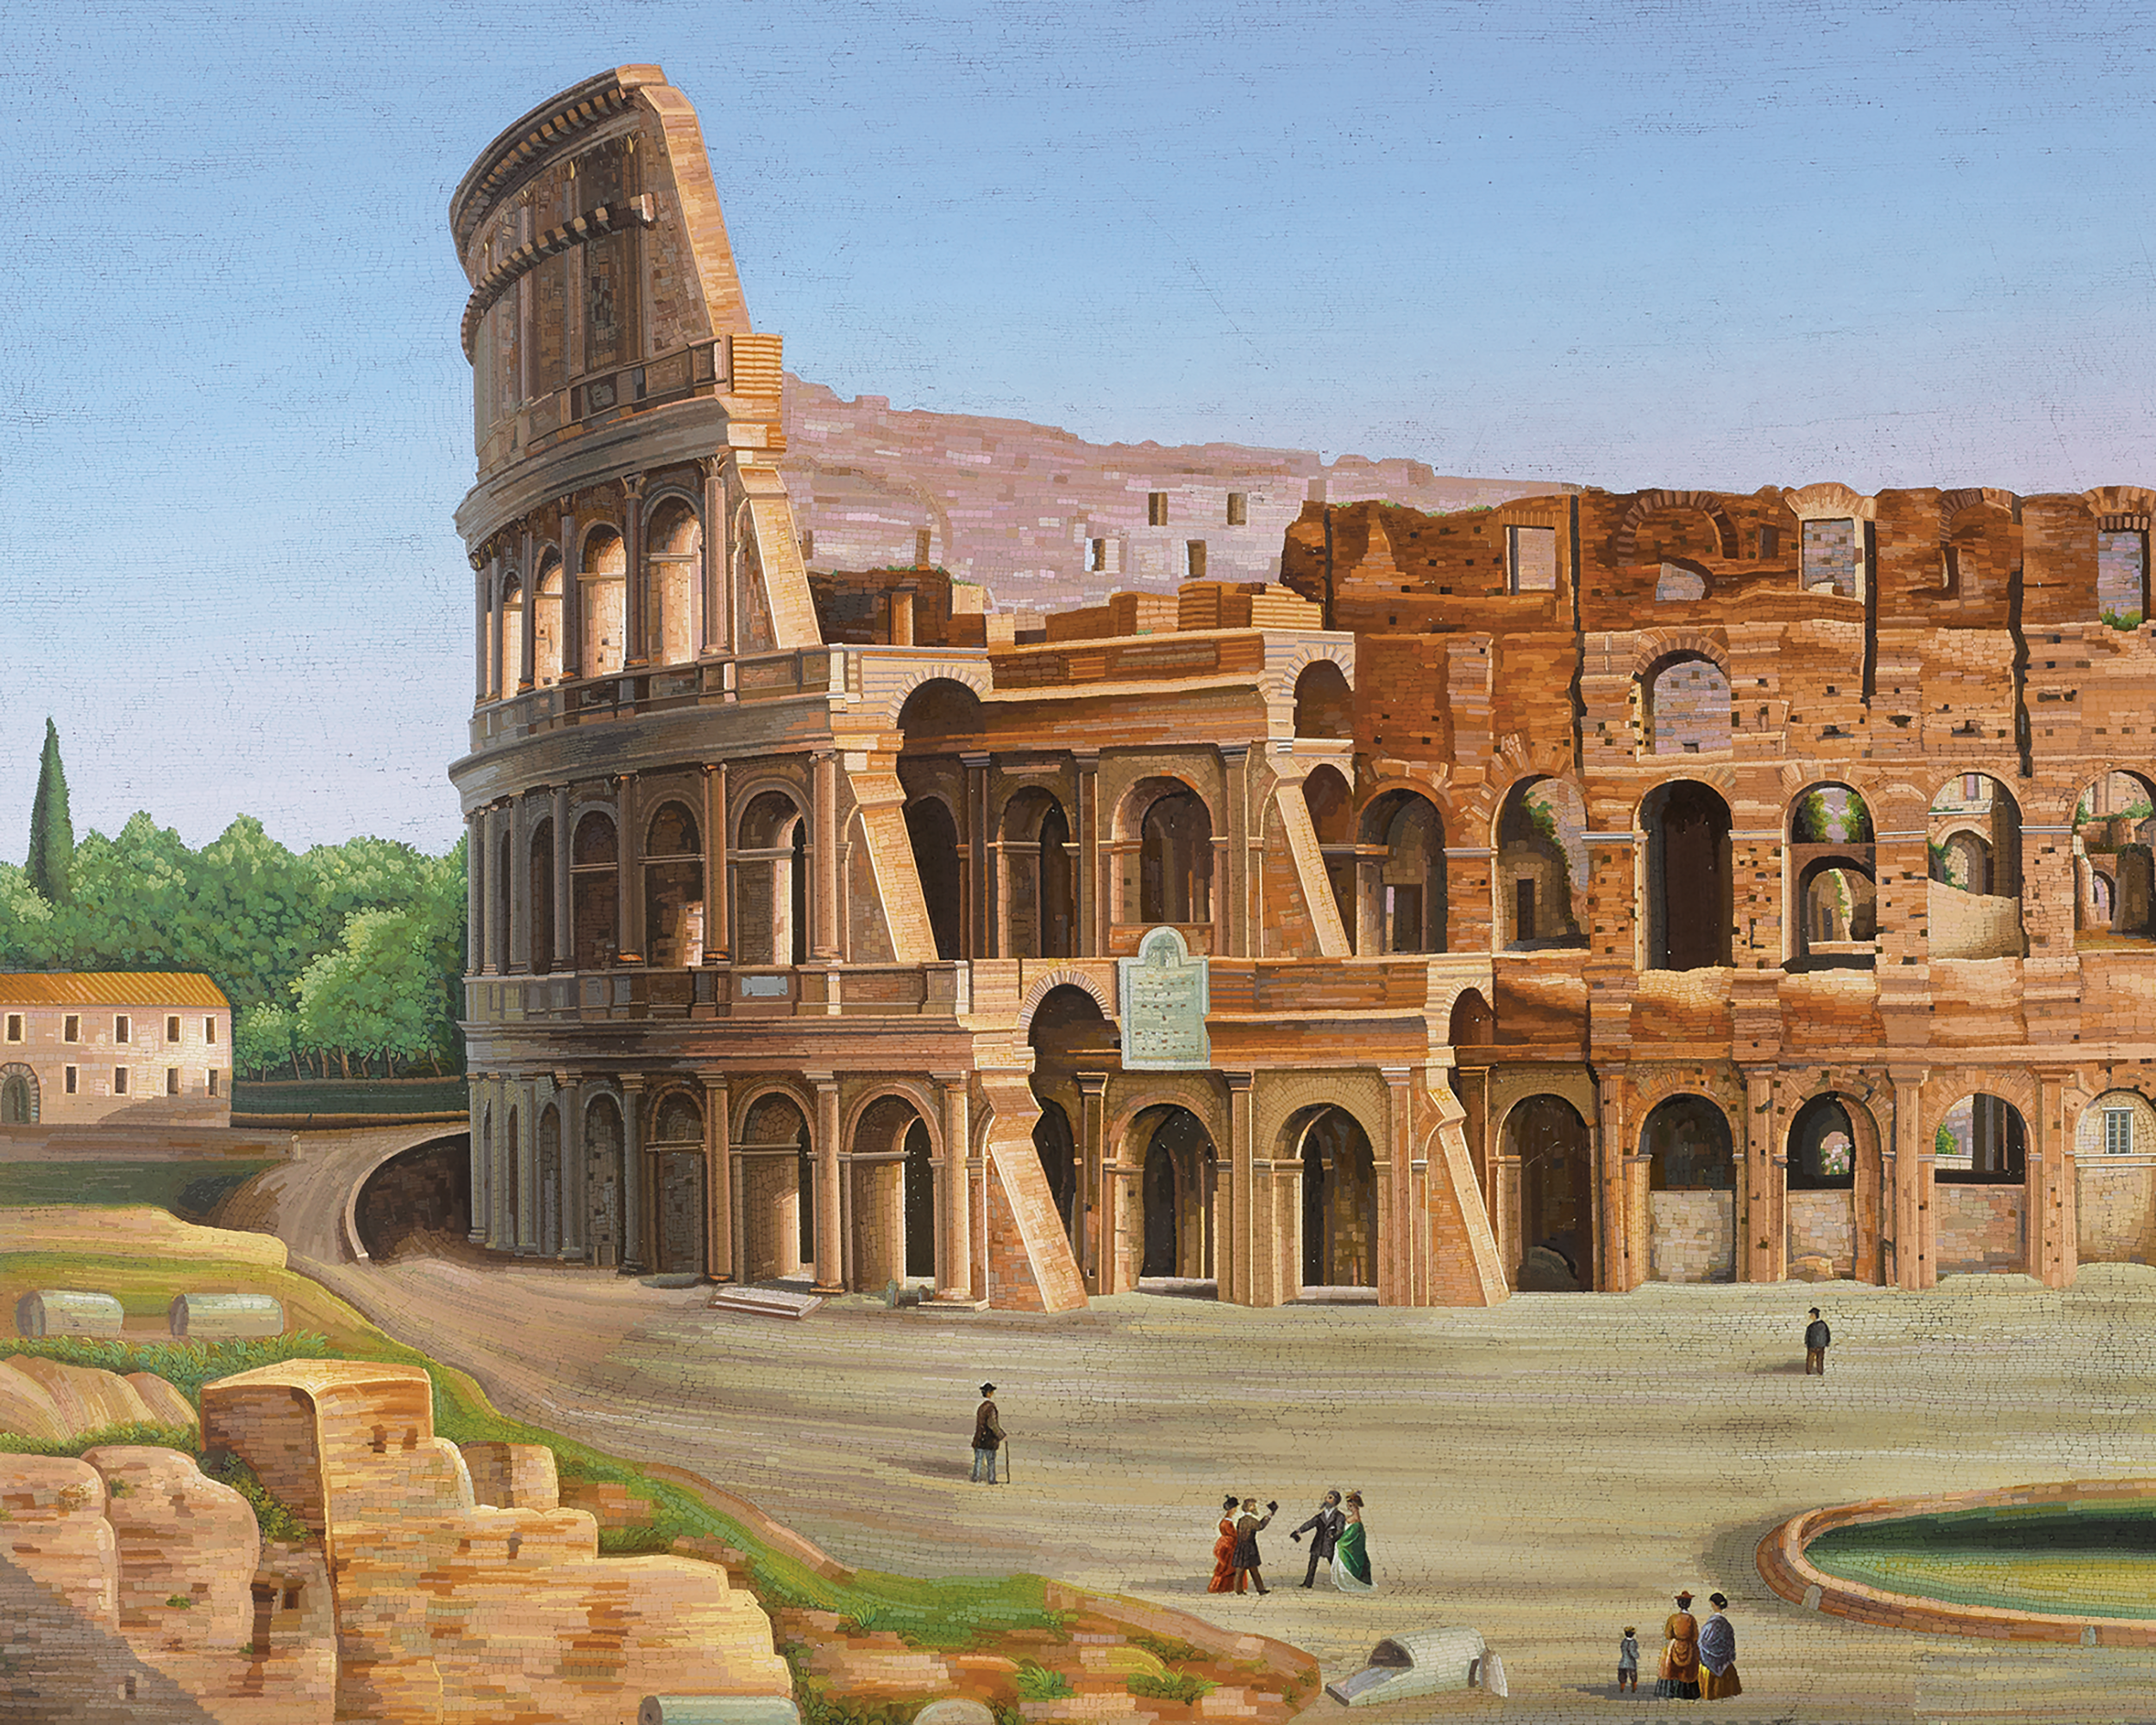 The Colosseum Micromosaic by Luigi Gallandt